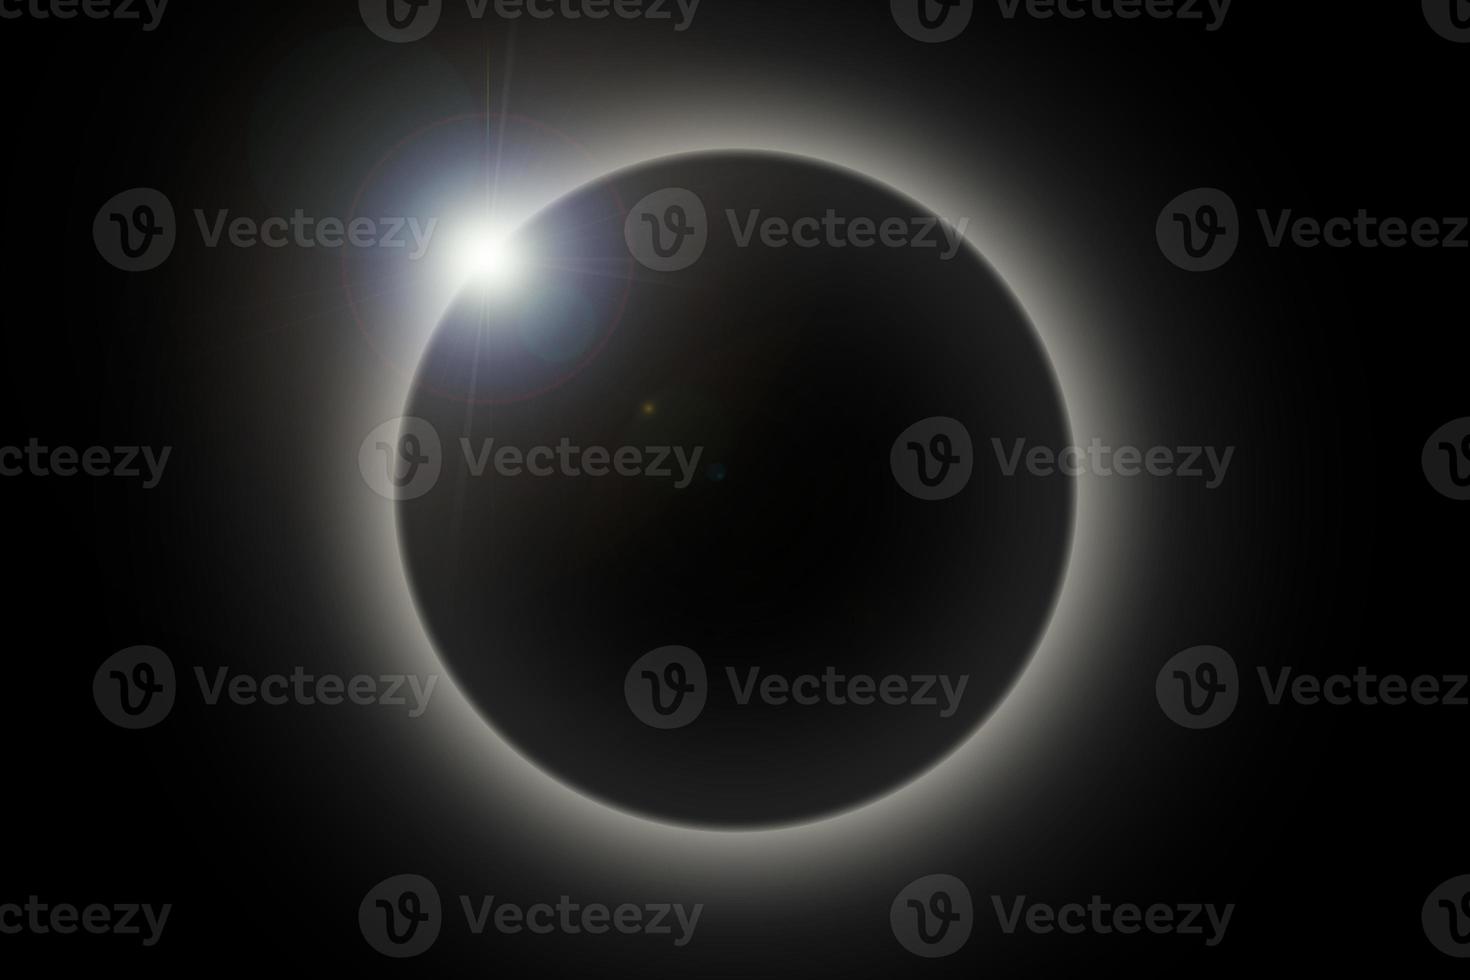 Eclipse solar total foto